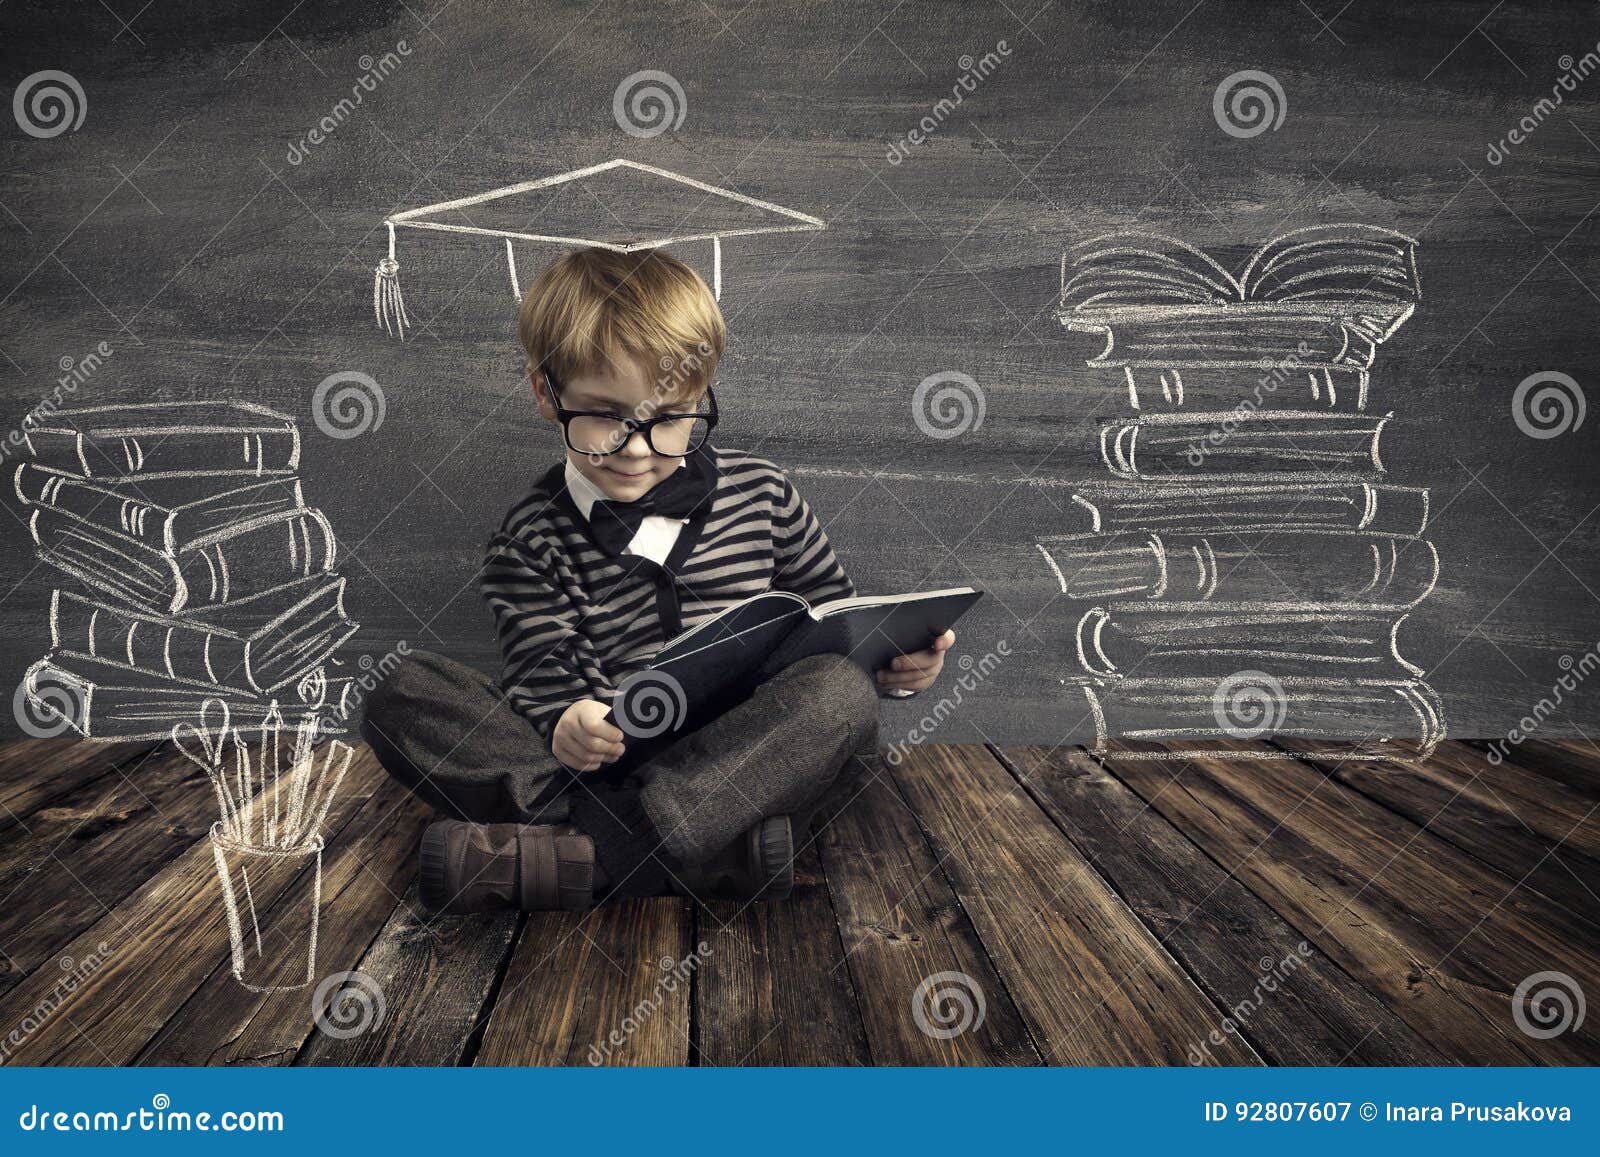 children education, kid read book, school boy reading books